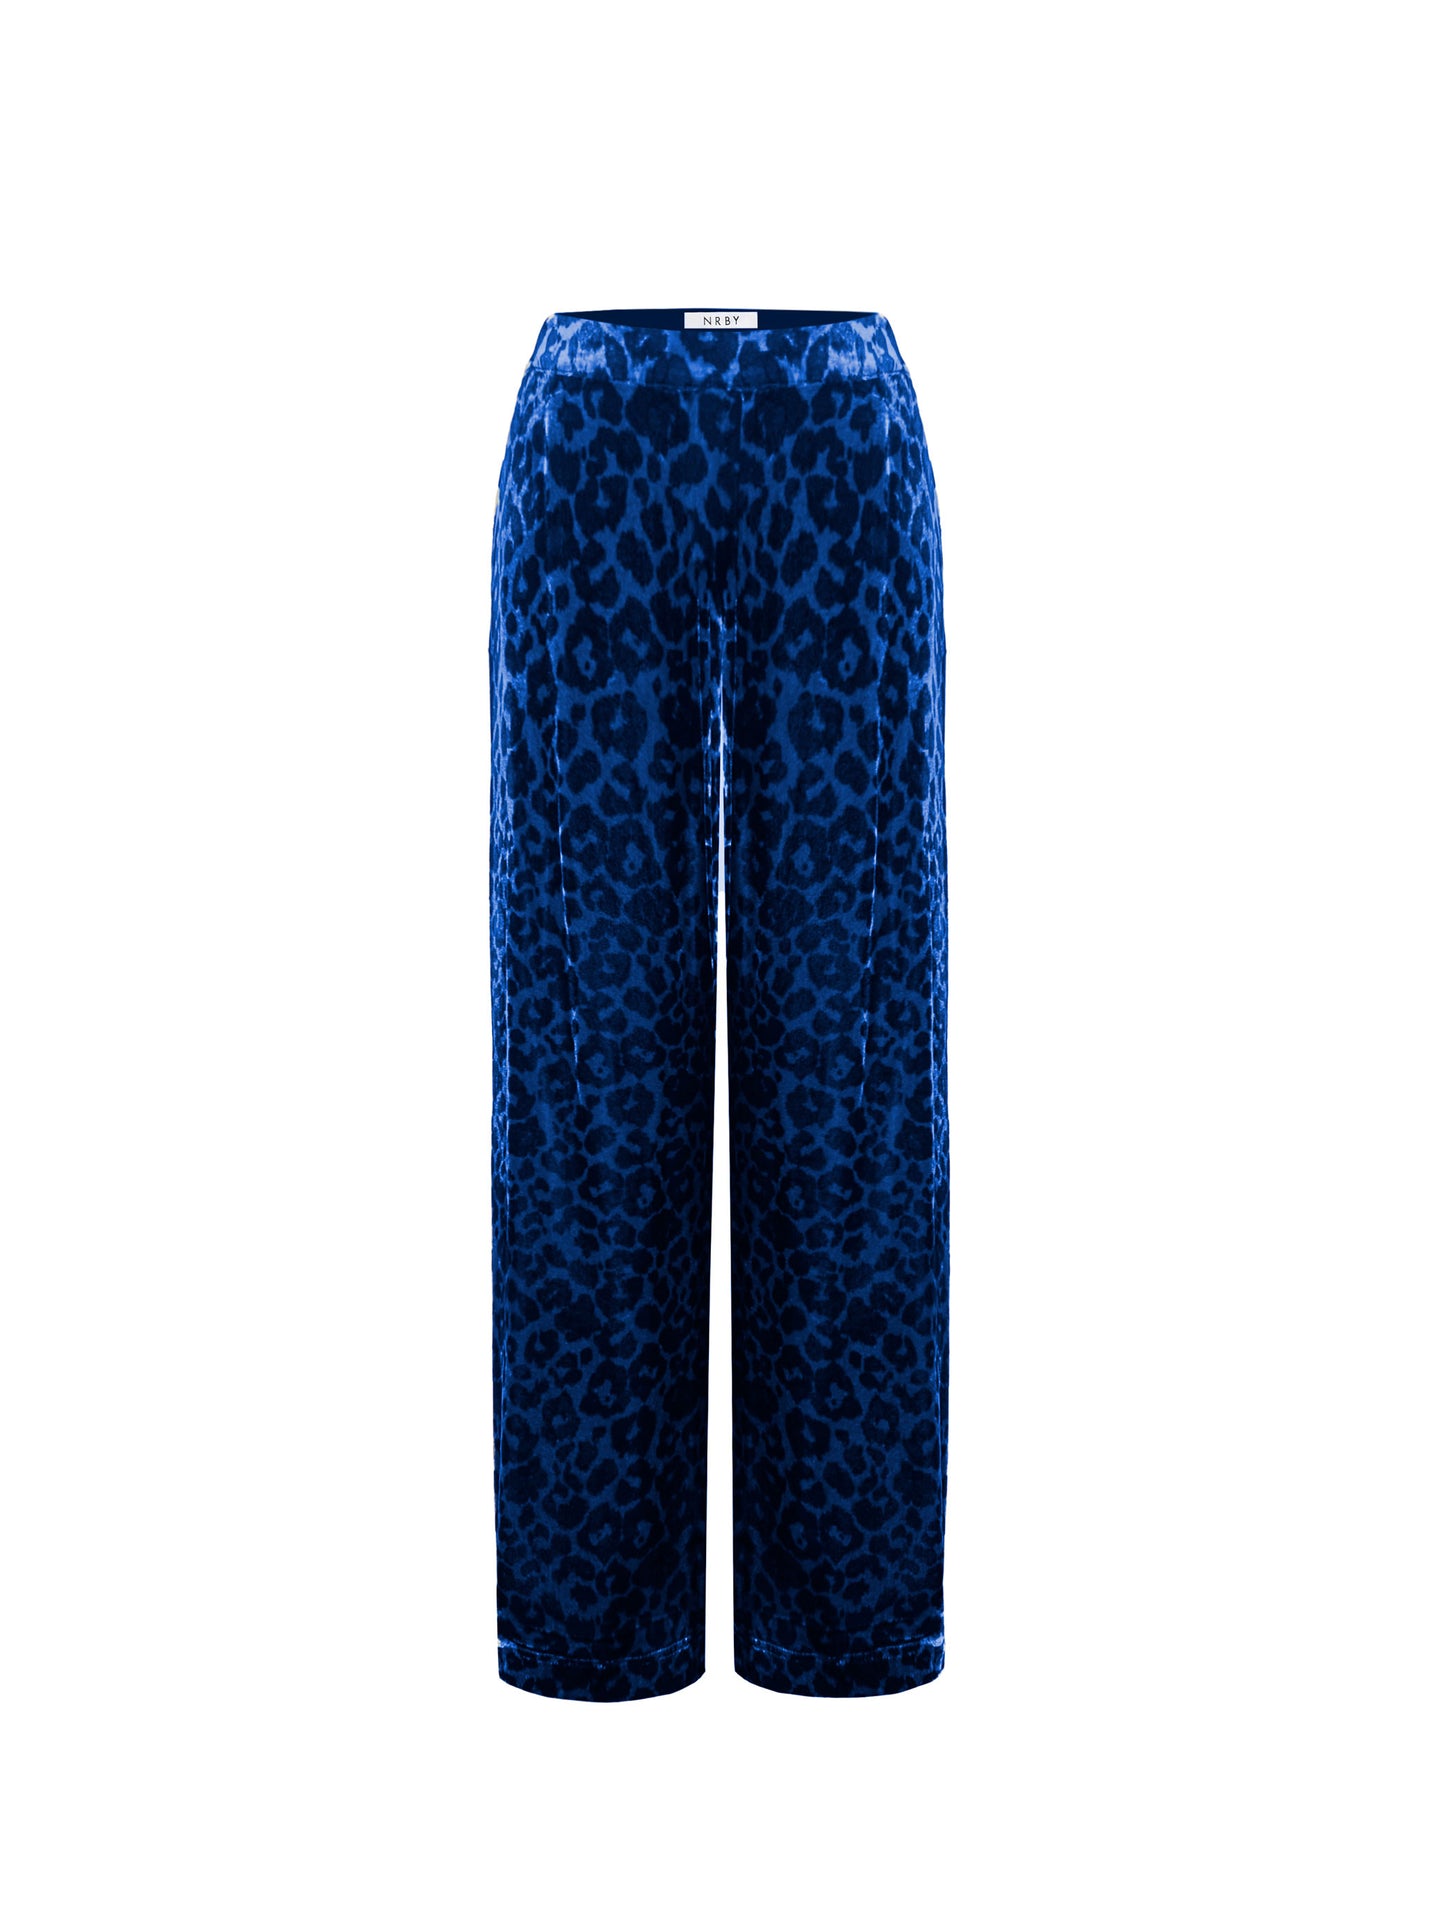 Thea velvet animal print trousers - Turquoise Animal Print